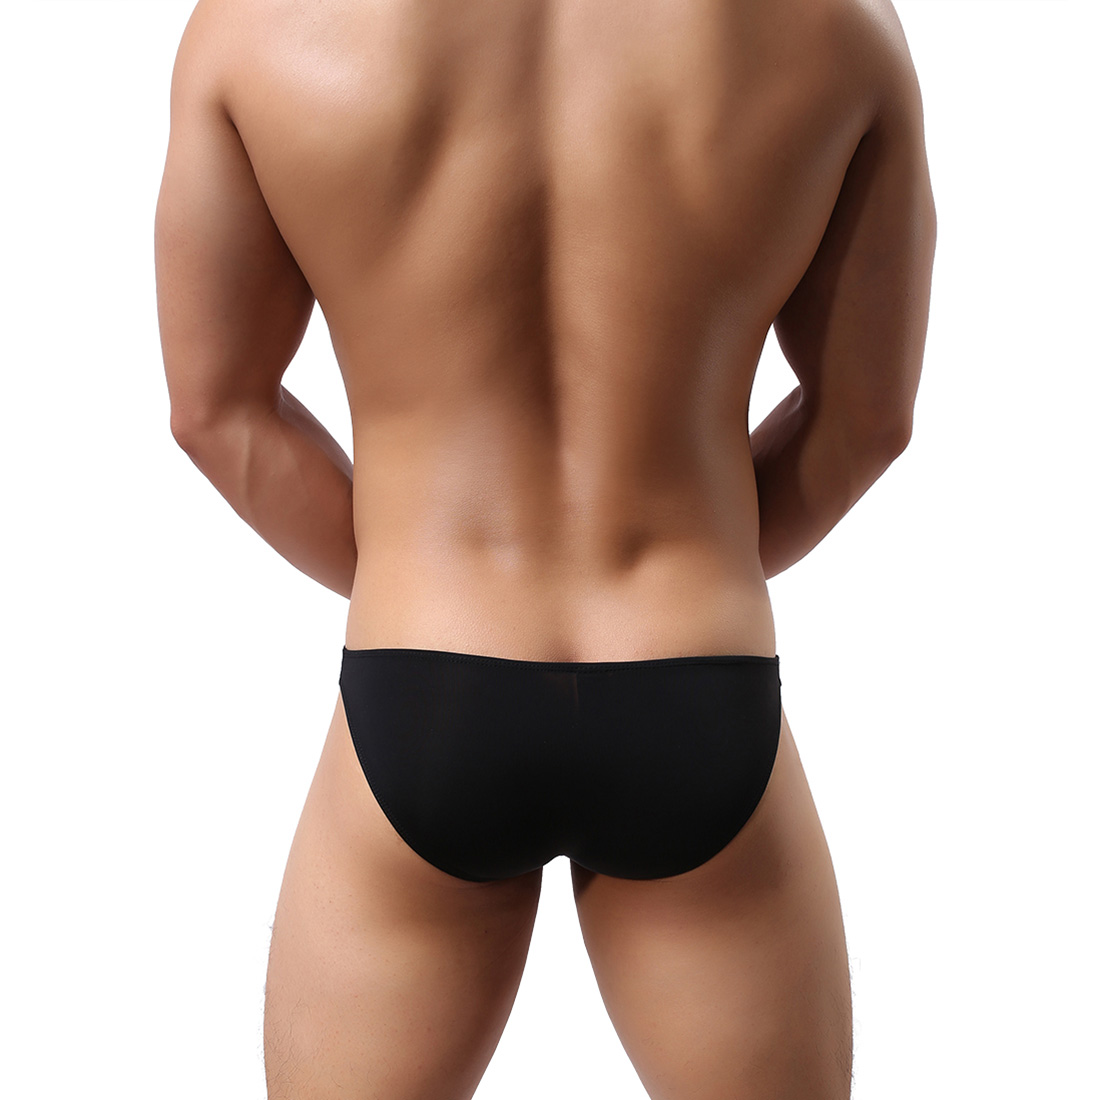 Men's Lingerie Underwear Sexy Bikini Triangle Pants Shorts with Penis Sheath WH44 Black M